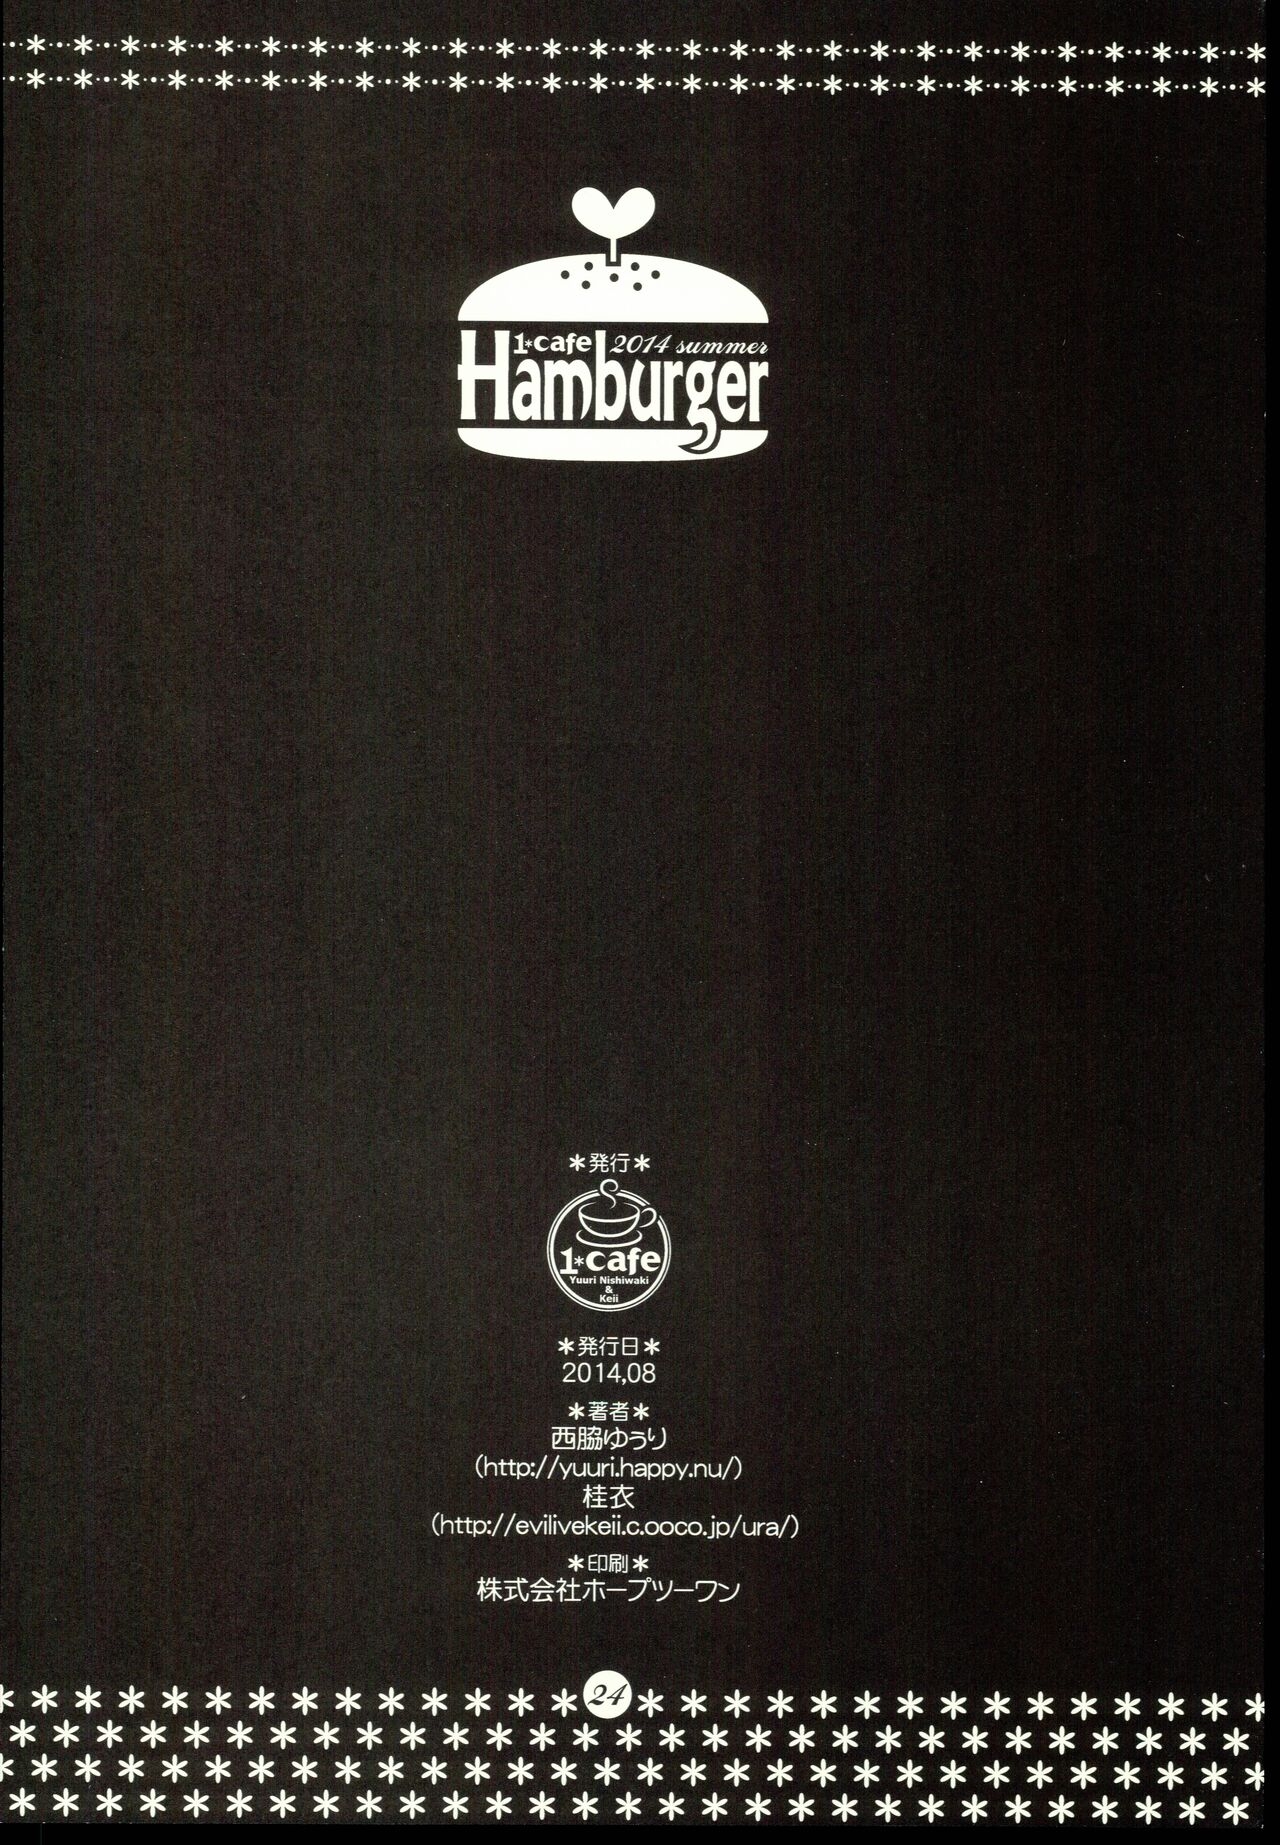 [1-cafe] Hamburger 25